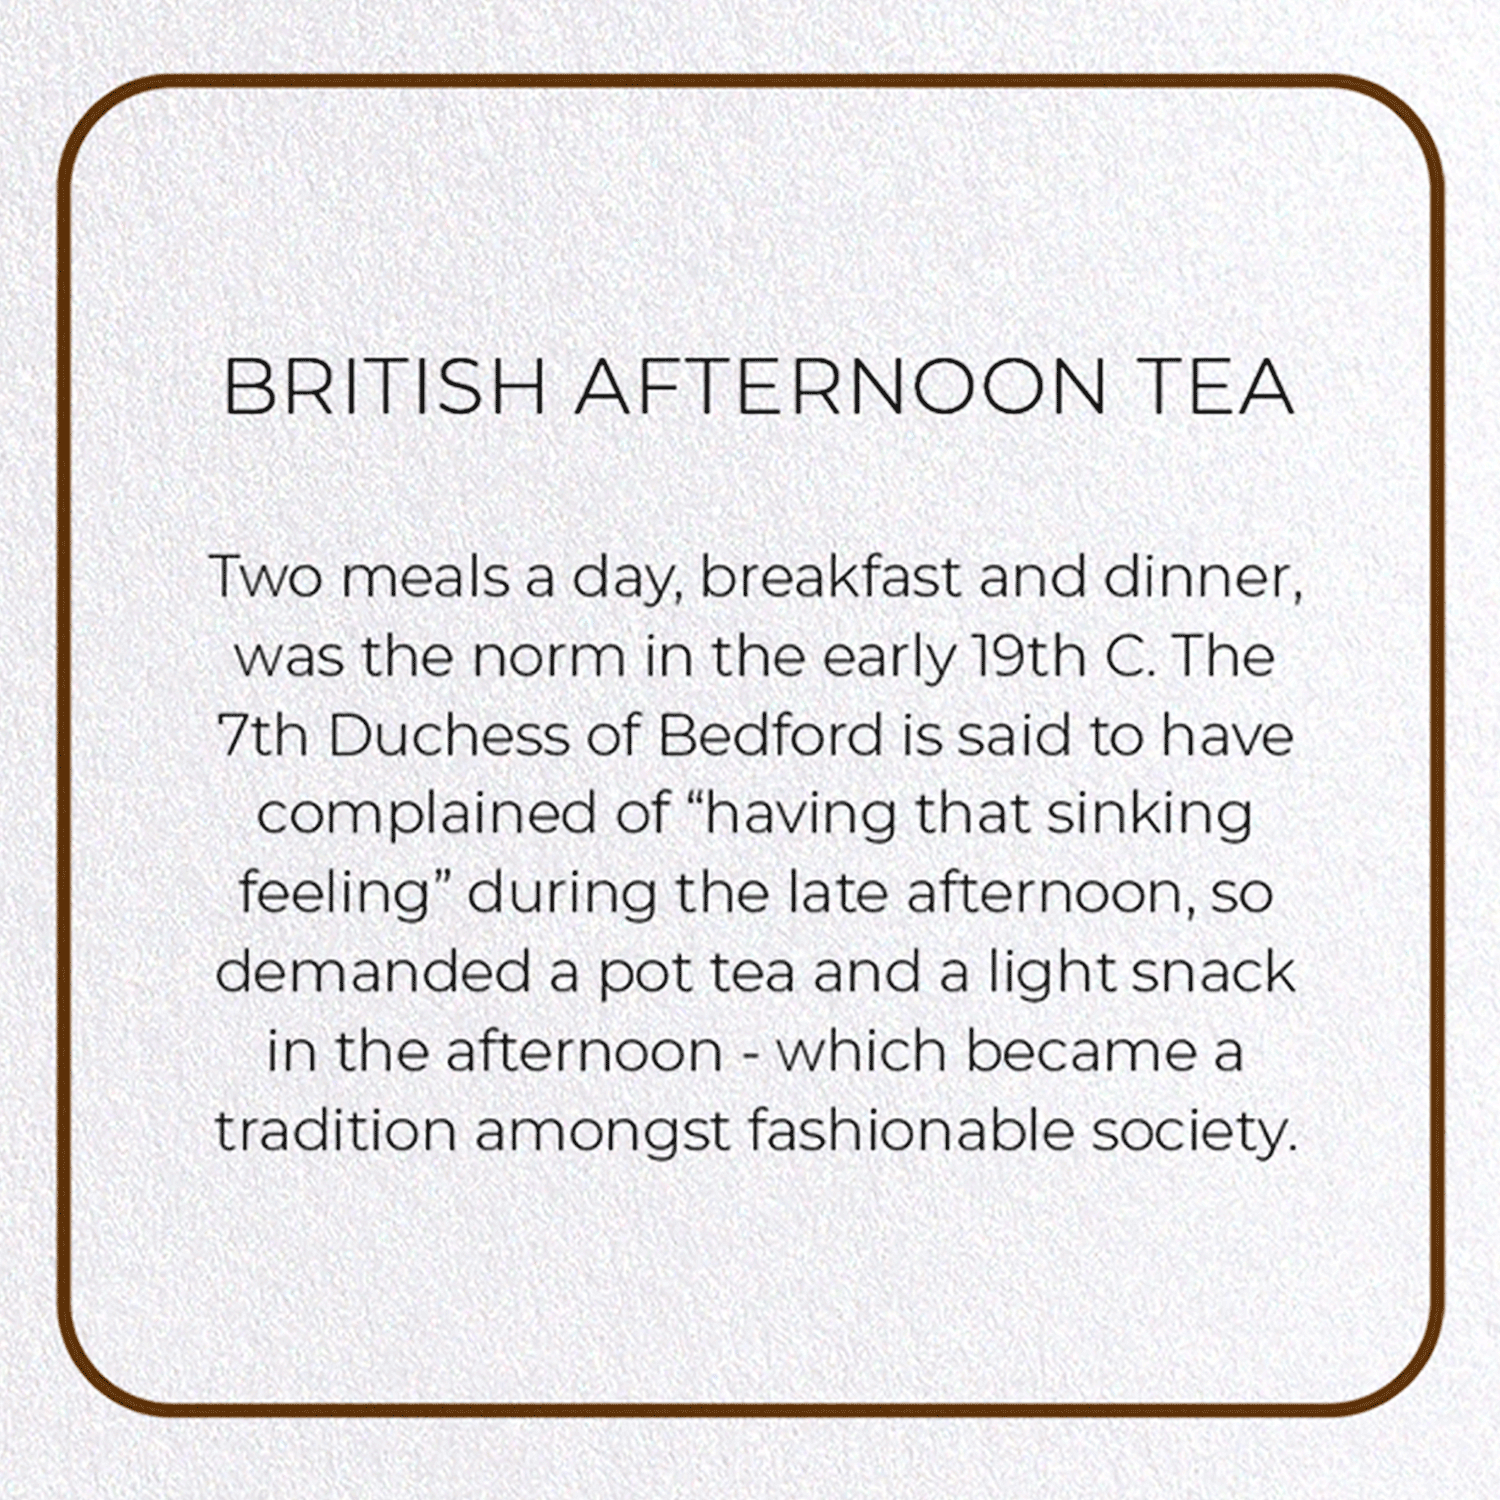 BRITISH AFTERNOON TEA